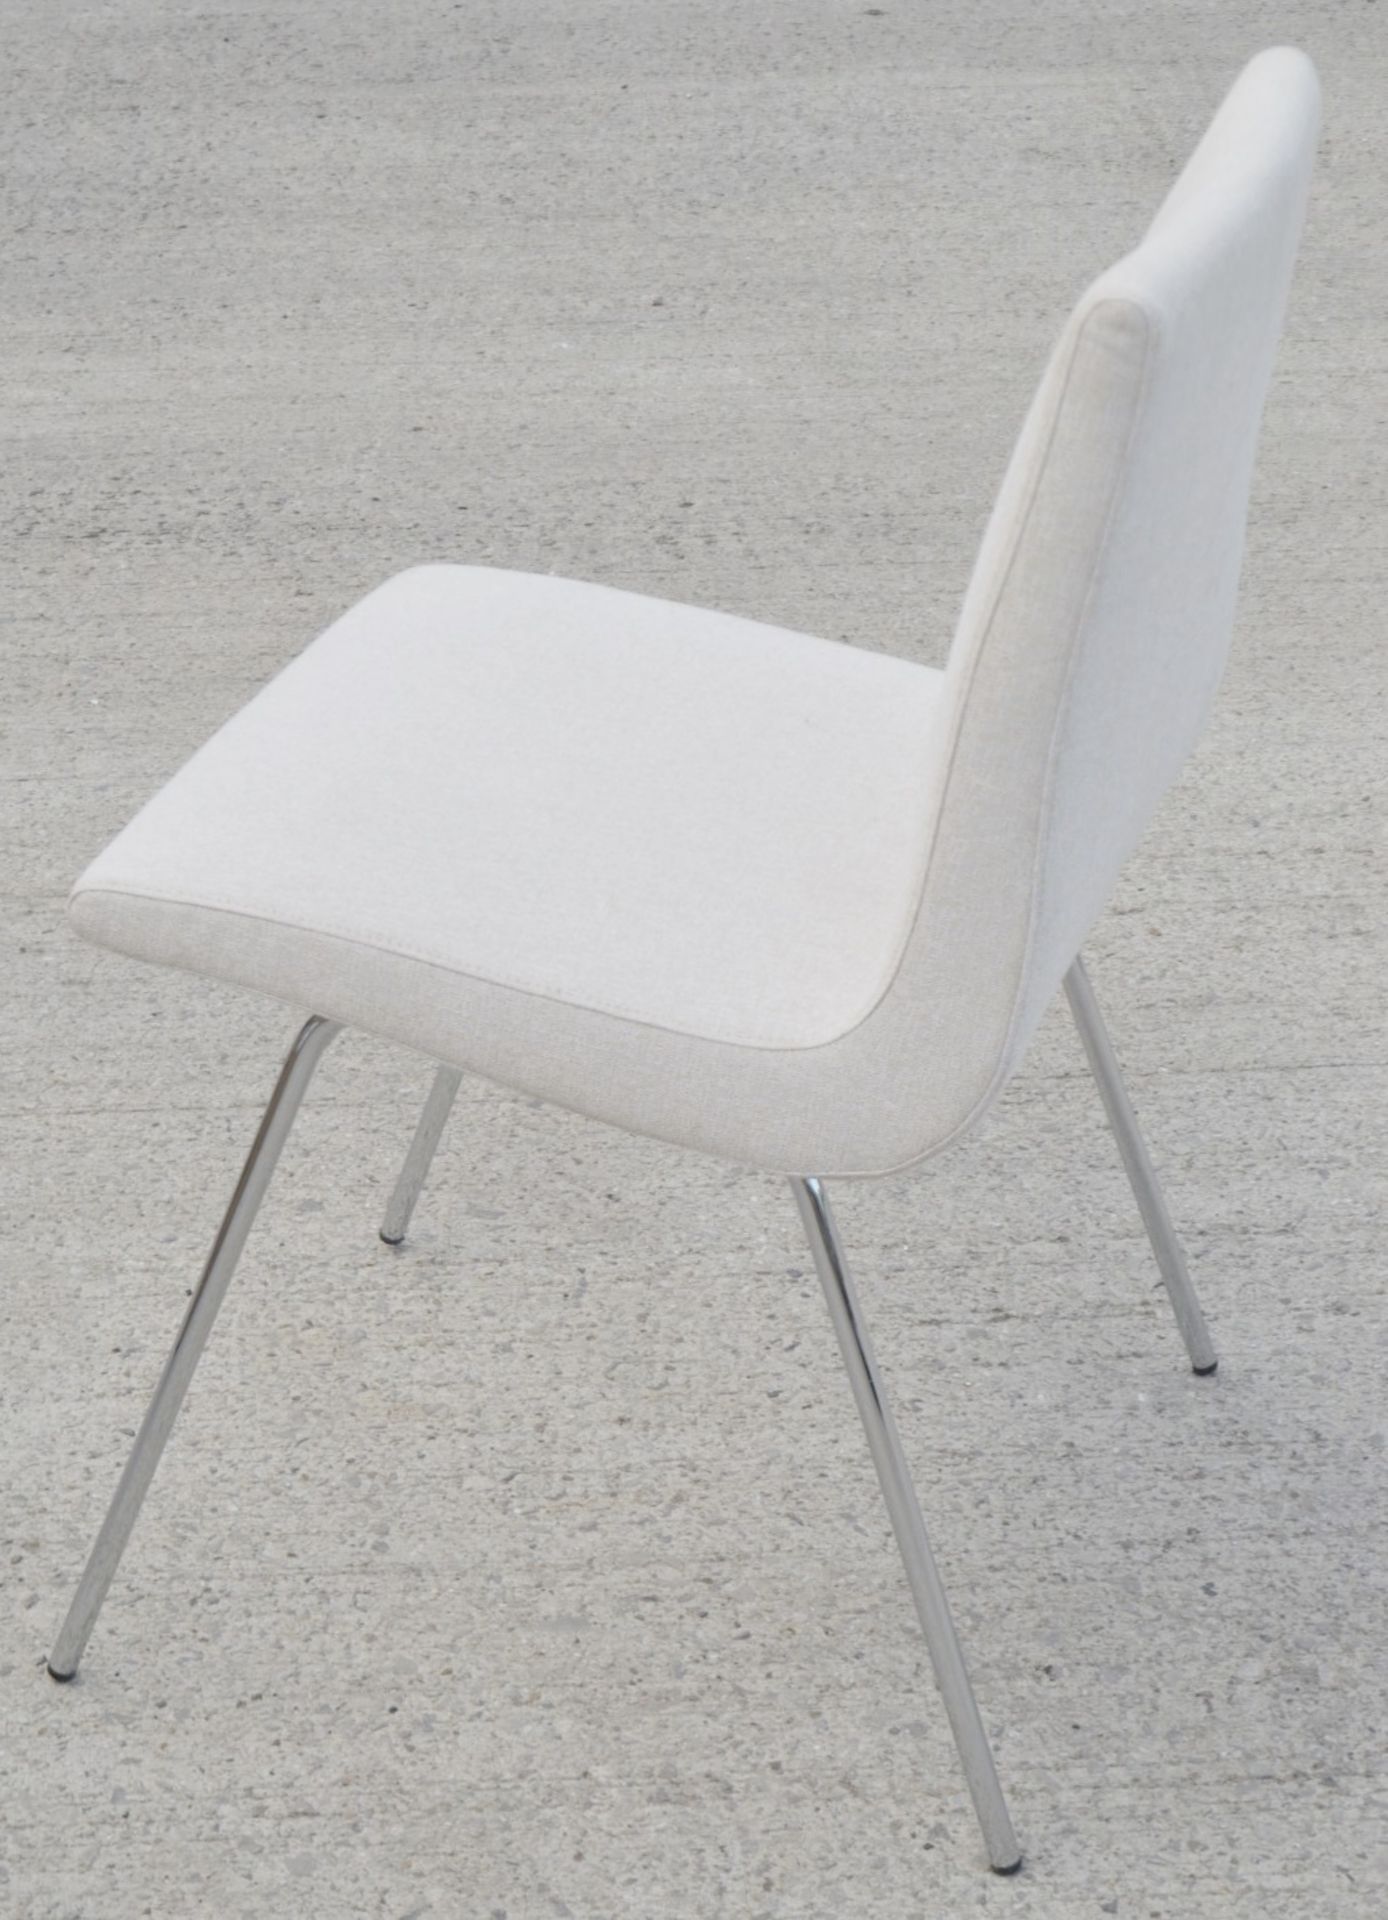 Pair Of LIGNE ROSET 'TV' Designer Dining Chairs In A Light Neutral Beige Fabric & Chromed Steel Legs - Image 2 of 9